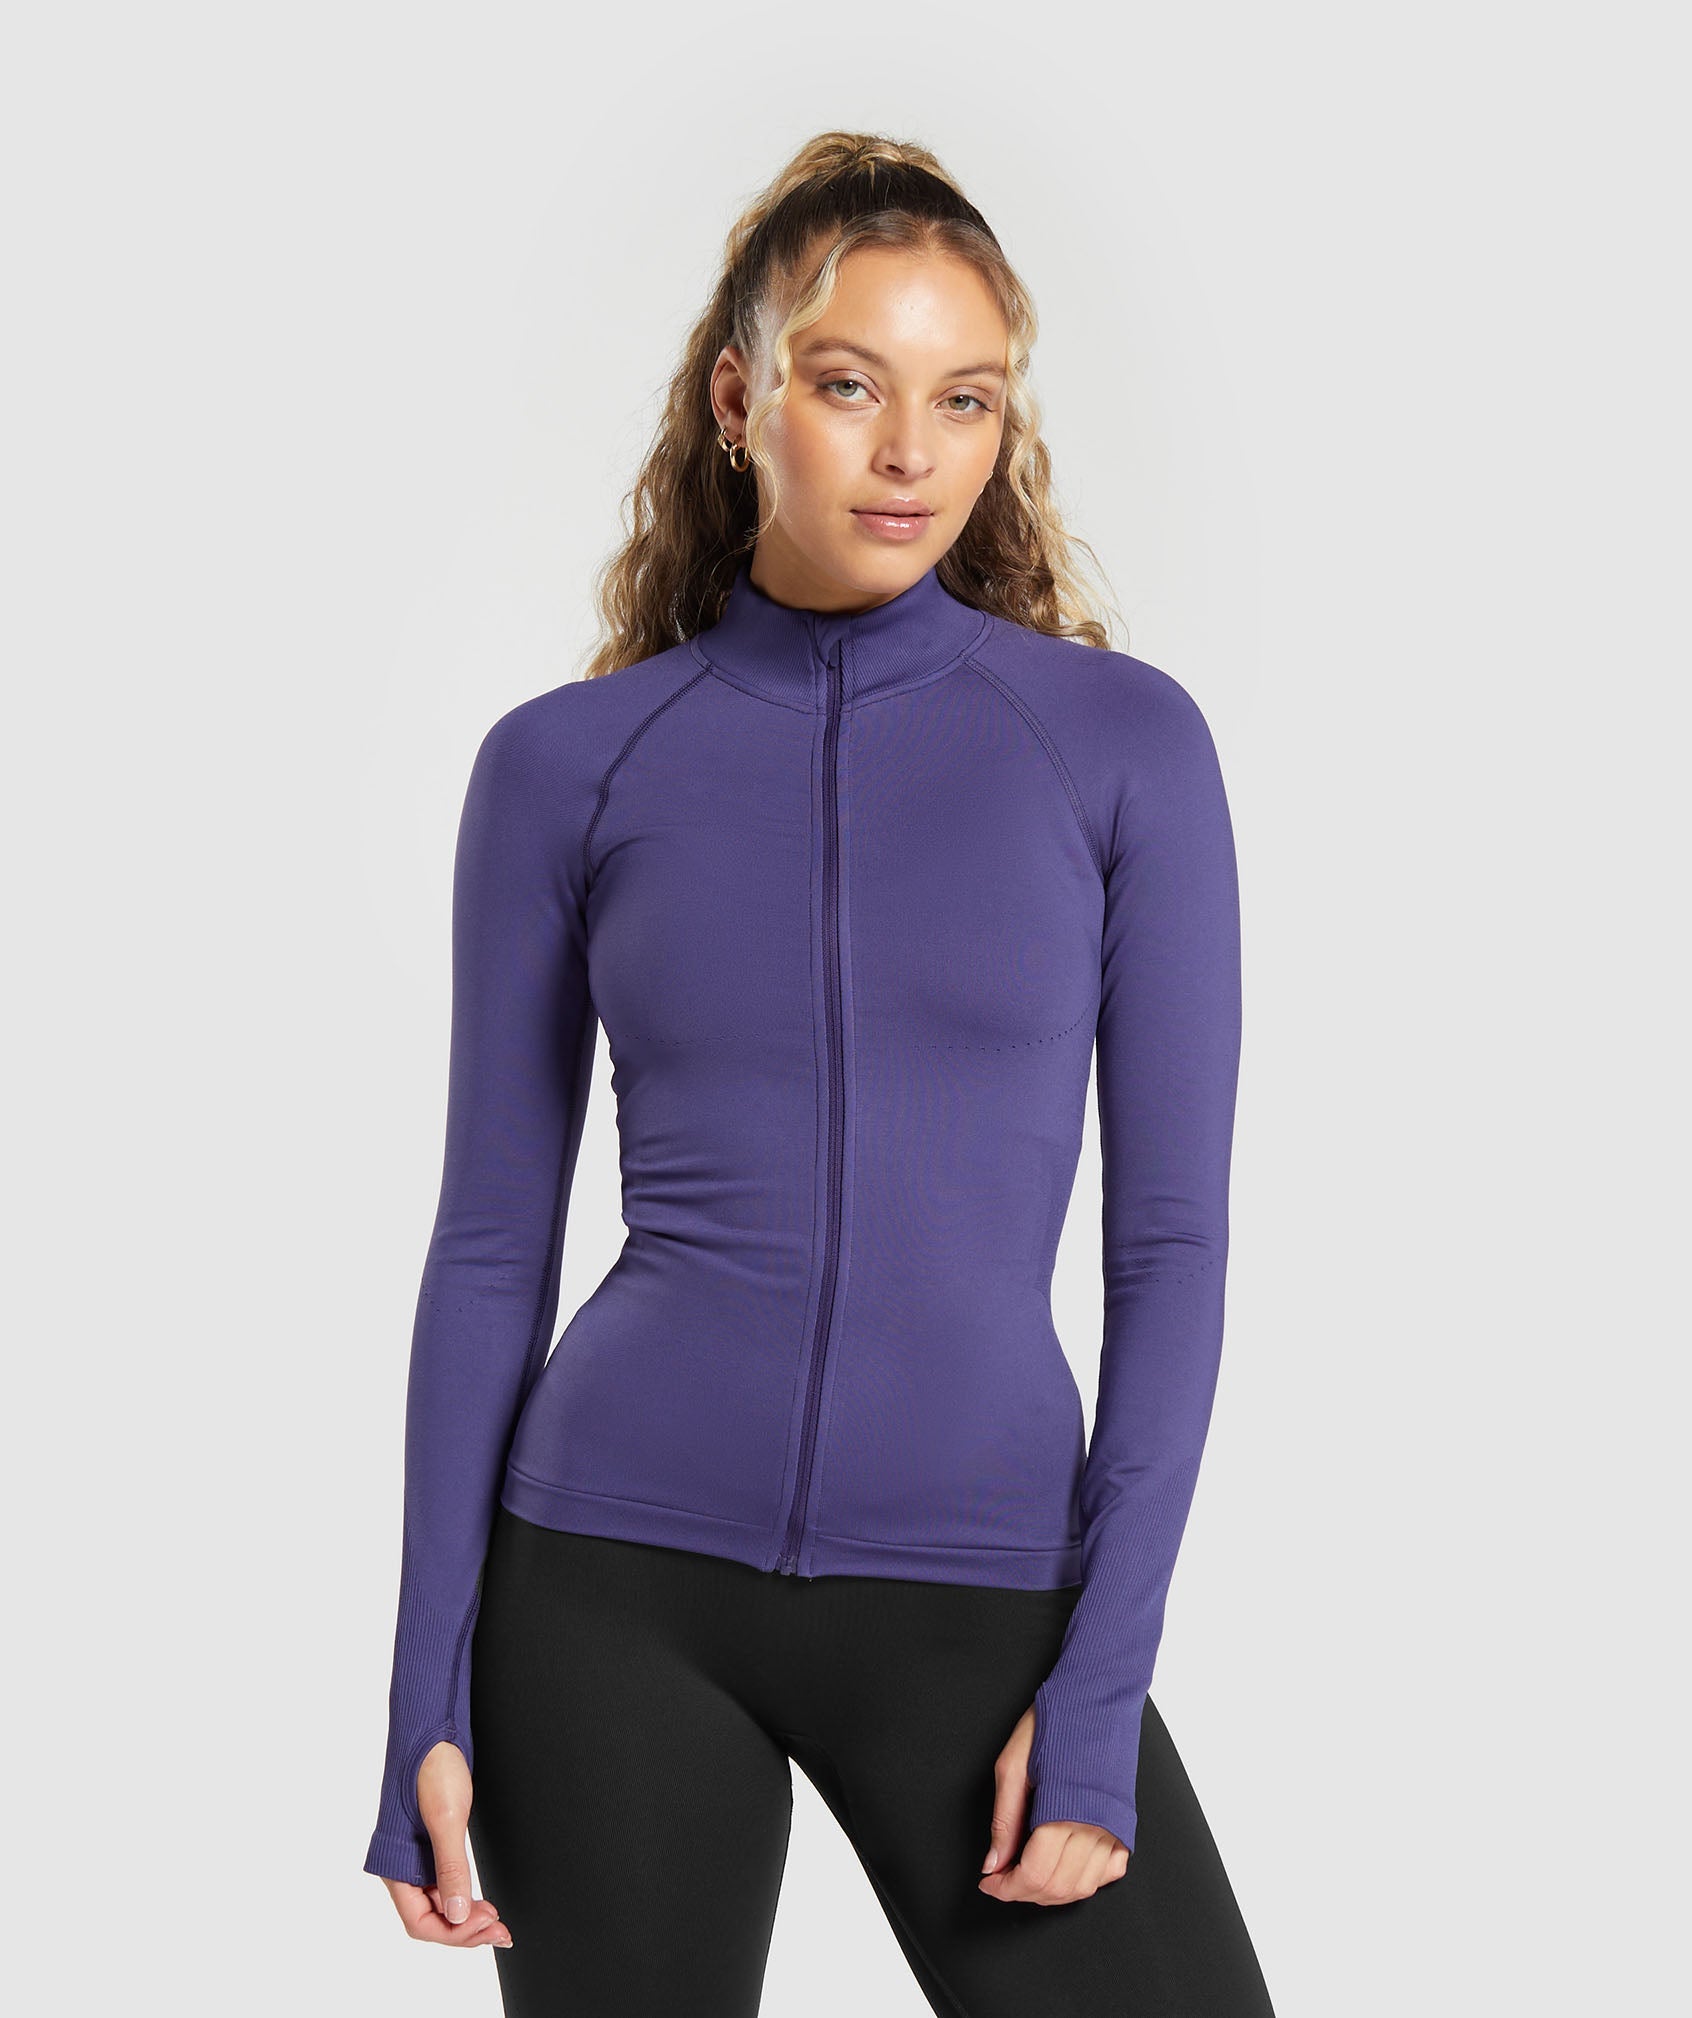 Sweat Seamless Zip Up Jacket in Galaxy Purple